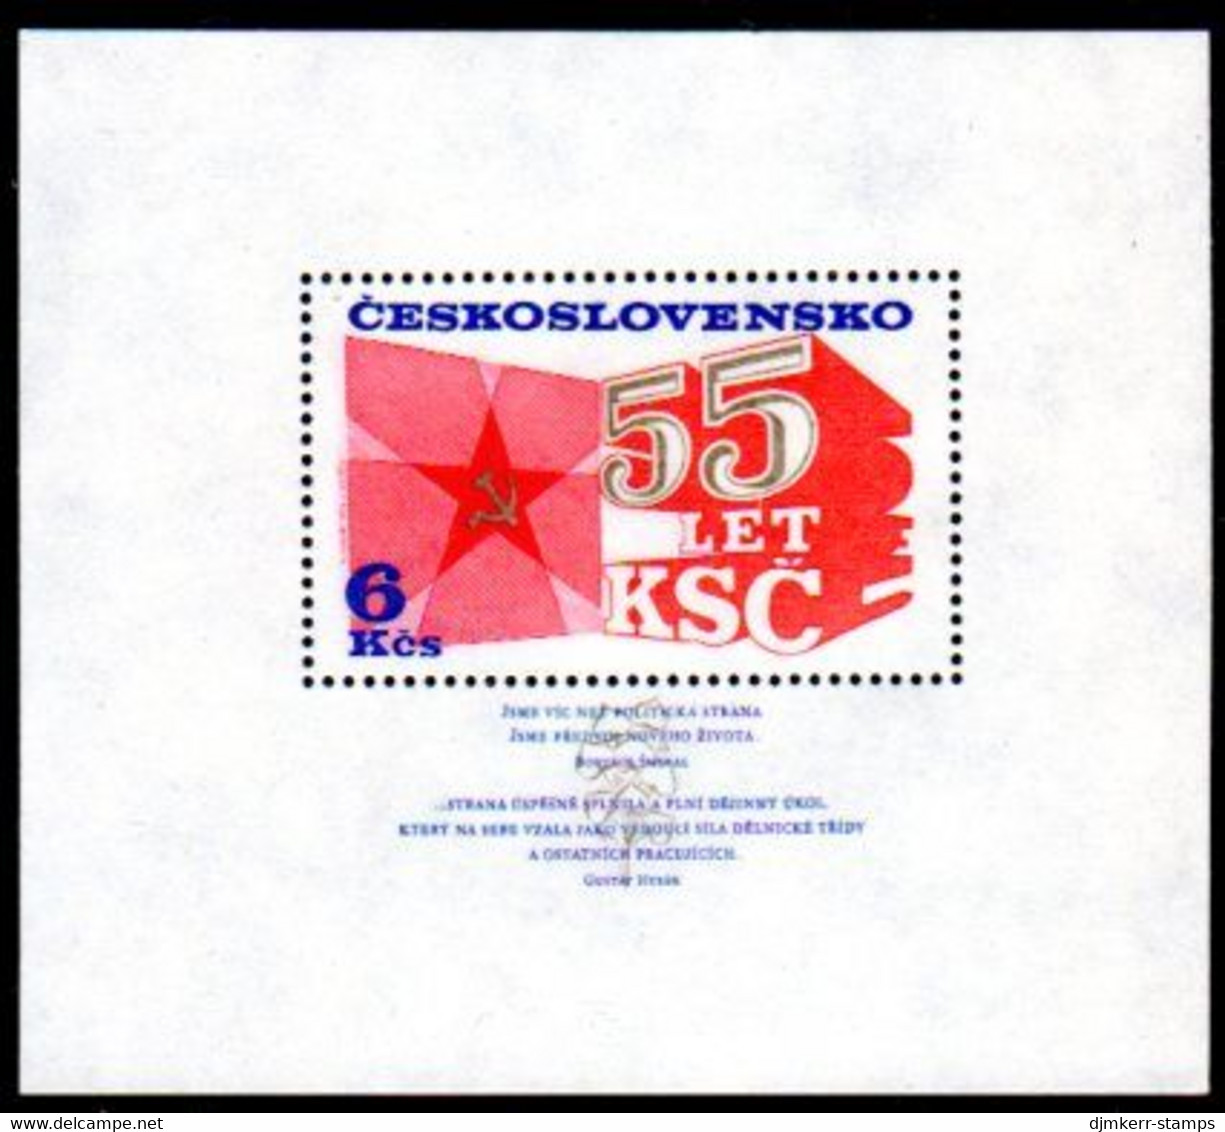 CZECHOSLOVAKIA 1976 Communist Party Anniversary Block  MNH / **. Michel Block 32 - Blocks & Sheetlets